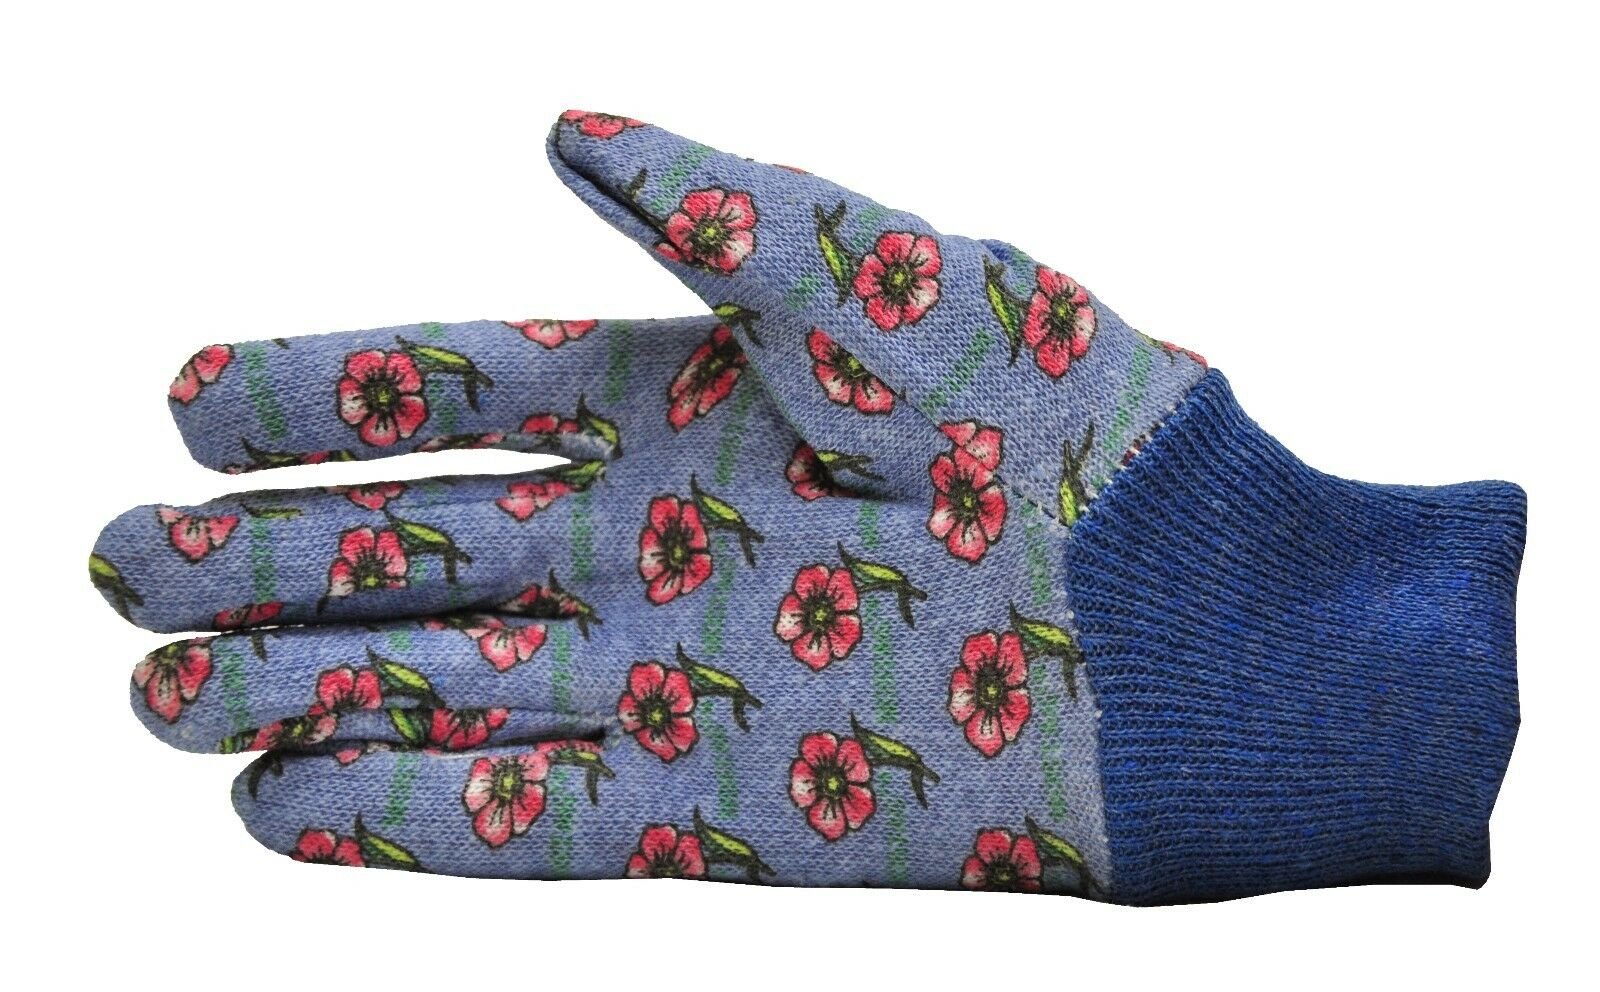 G & F Kids Garden Gloves 1823-3 JustForKids Work Gloves, 3 Pairs Green/Red/Blue per Pack - image 5 of 11